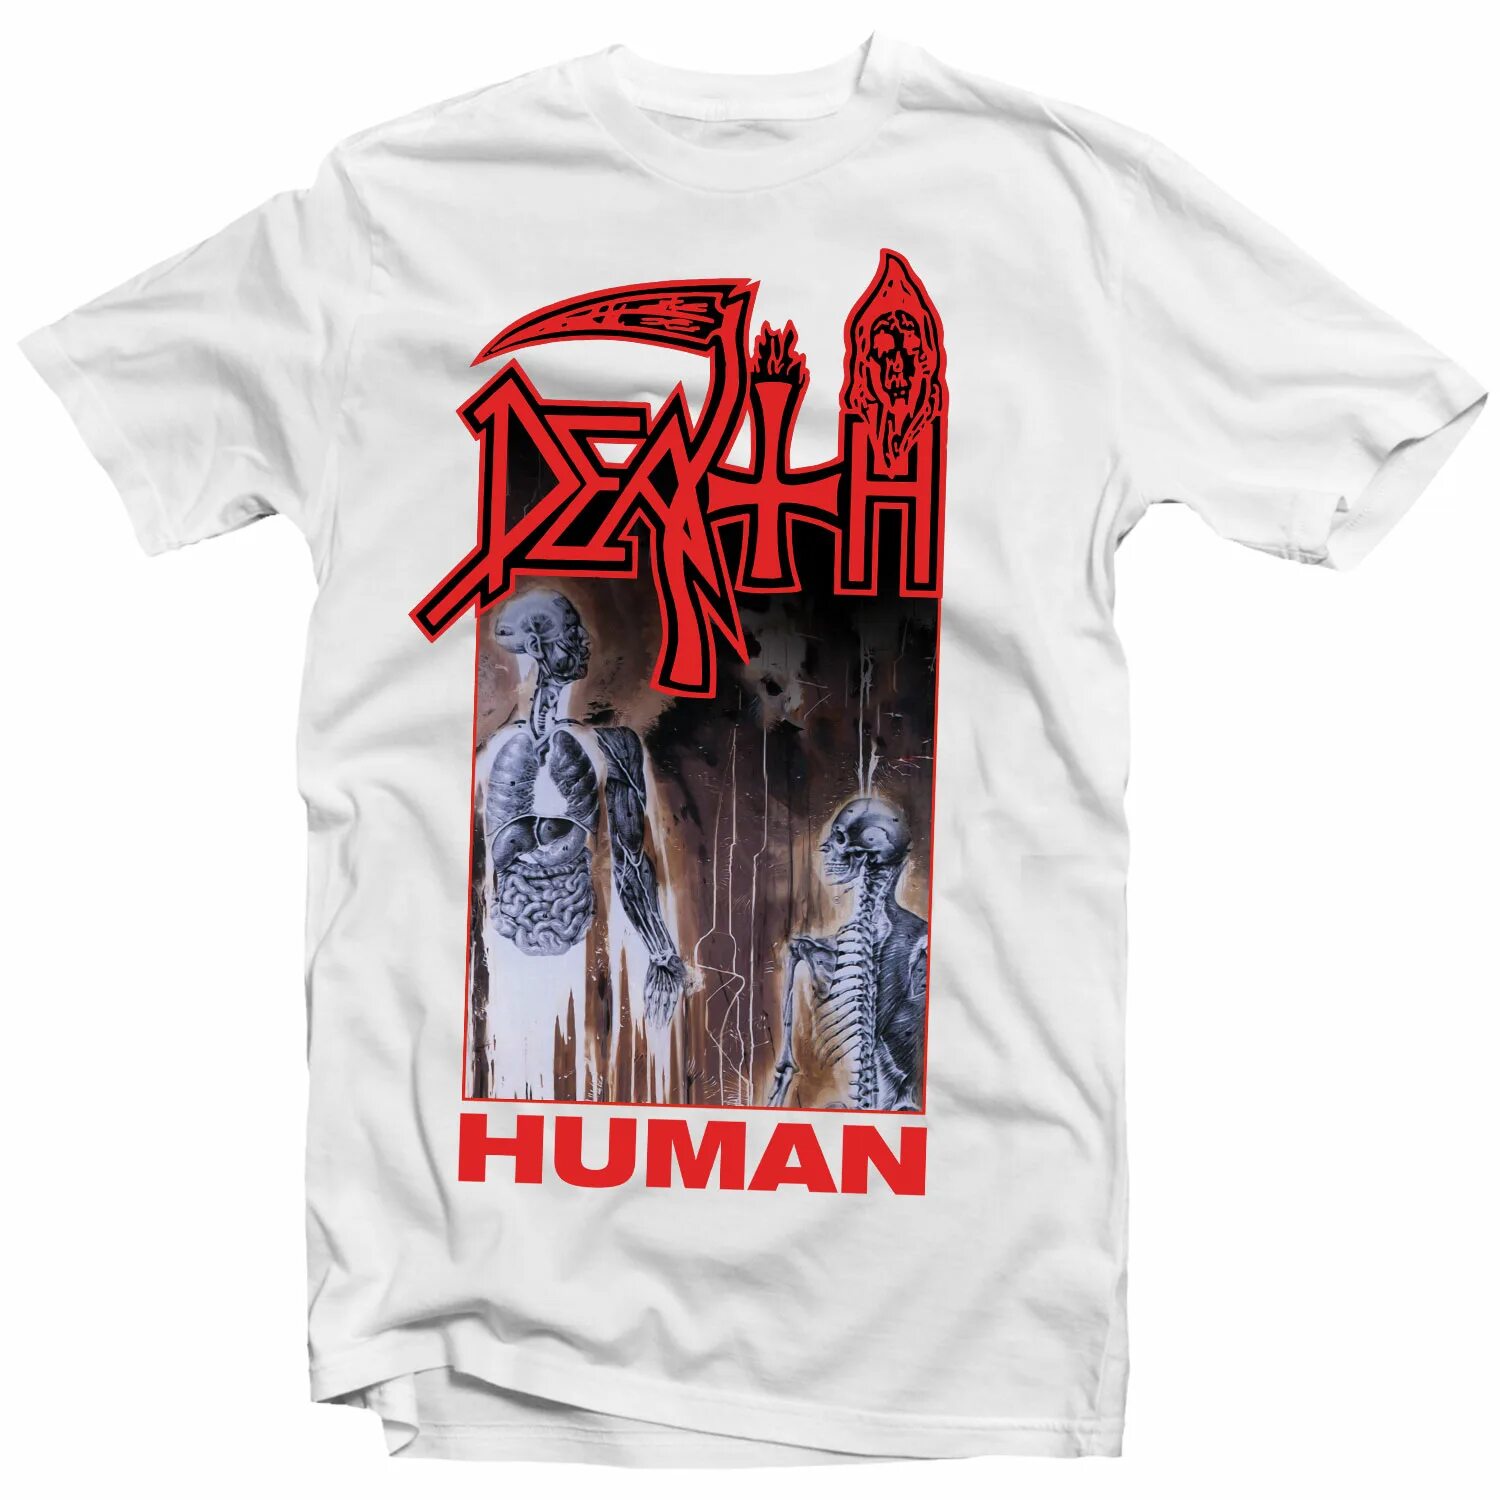 Human death. Death группа мерч. Death Human футболка. Майка Death Human.